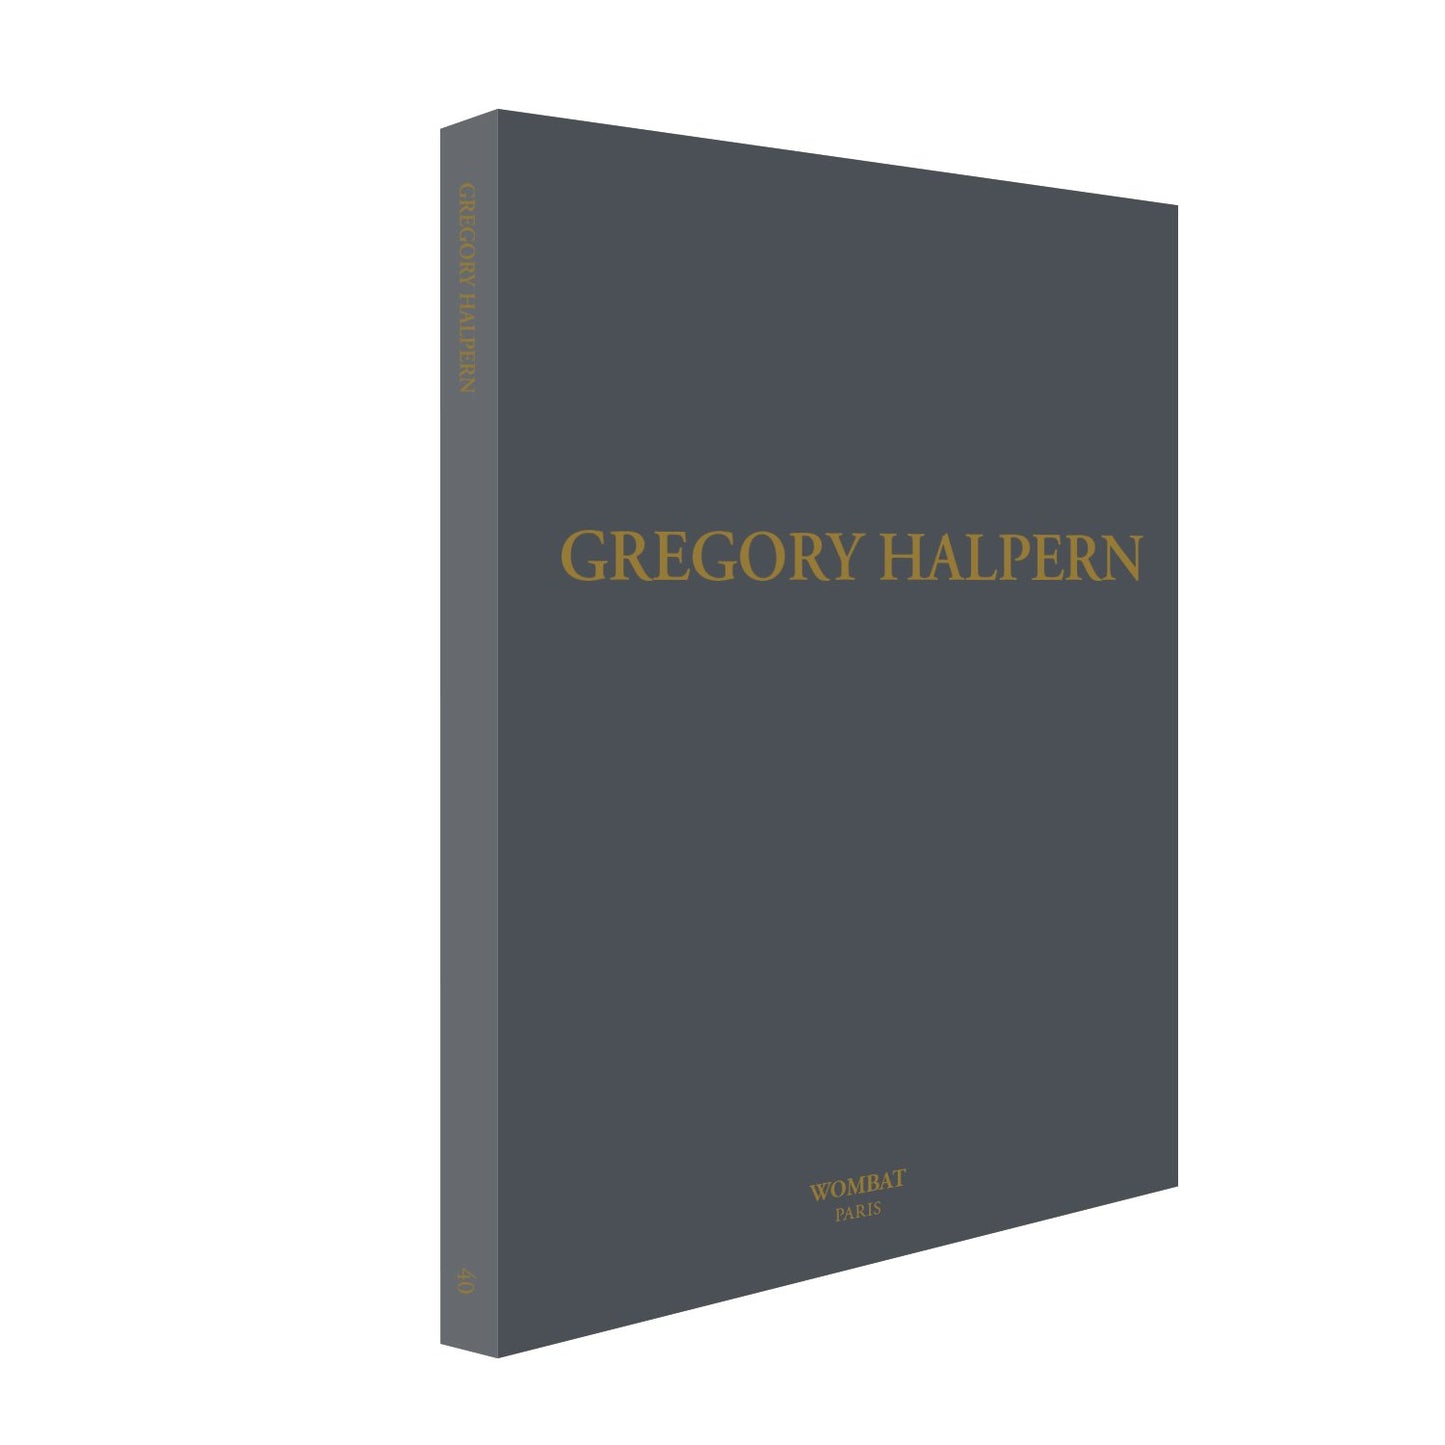 Artist Box 40 - Gregory Halpern